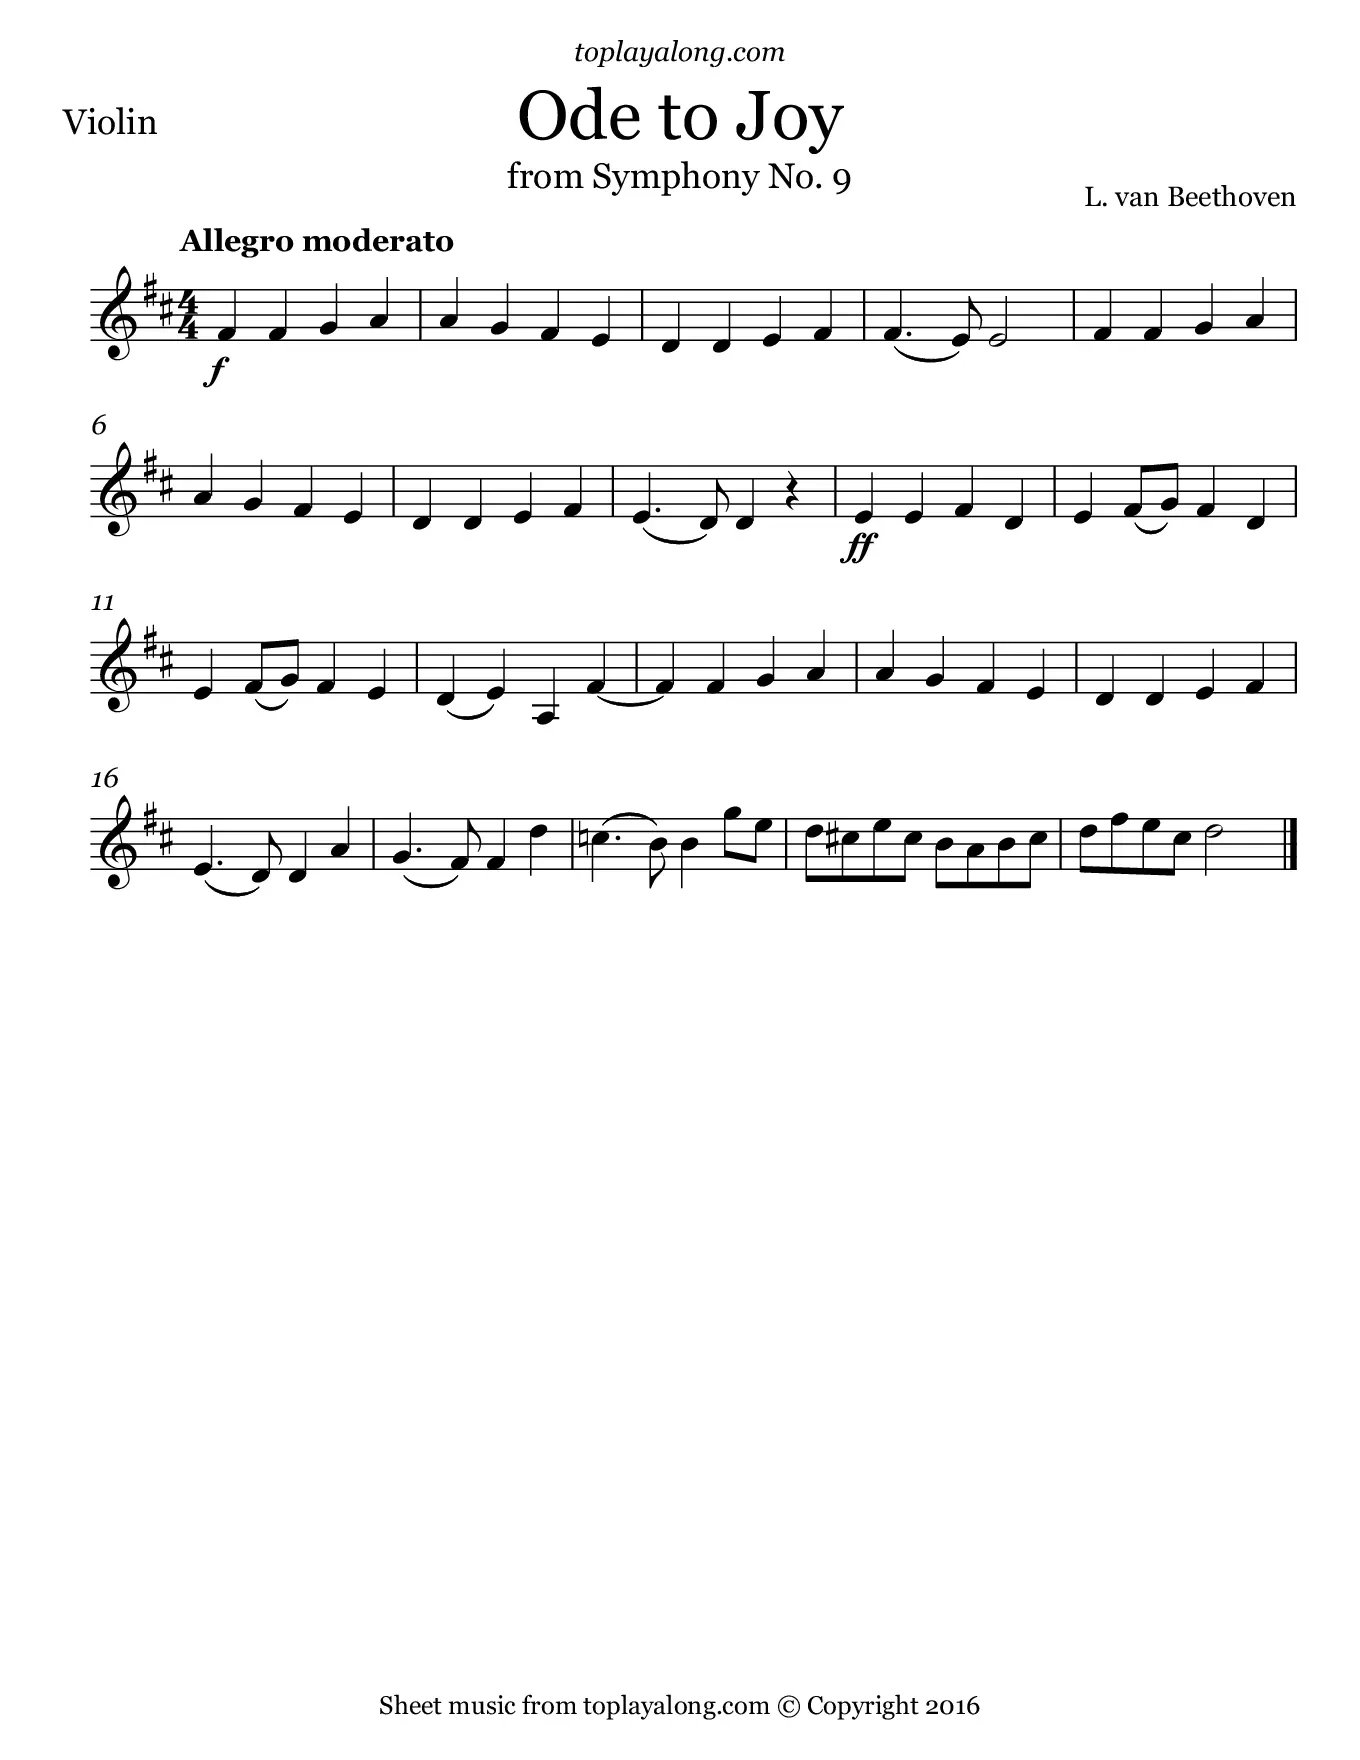 ode to joy violin sheett - Is Ode to Joy a beginner song